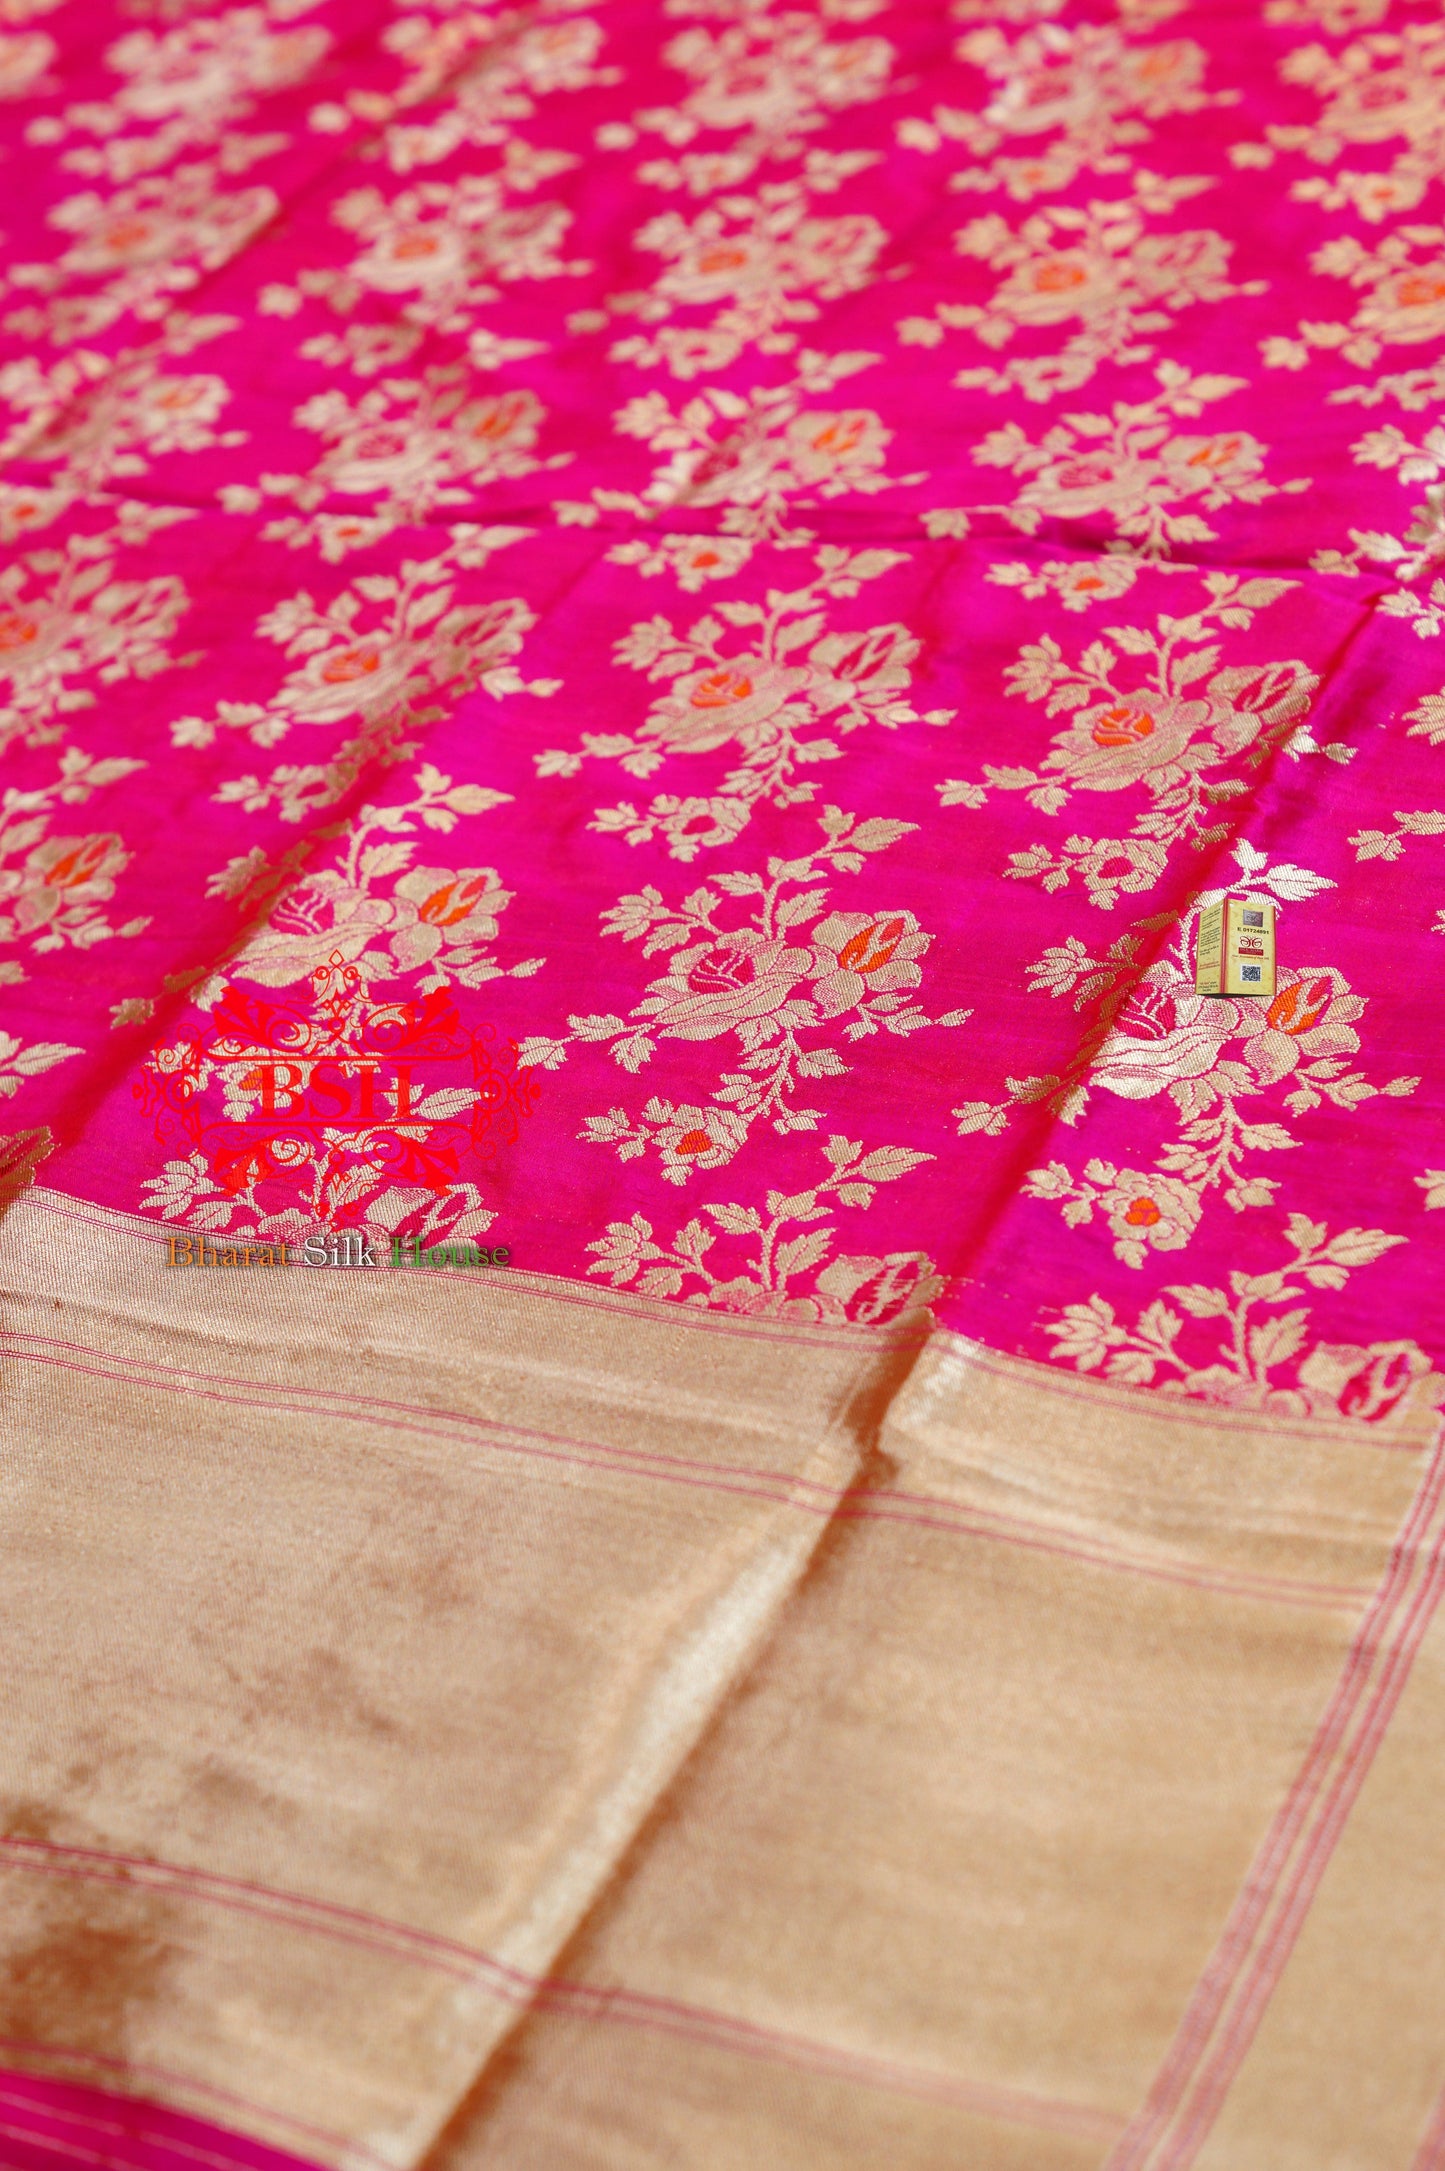 Rani Pink Handwoven Banarasi Kataan Silk Dupatta Pure Silk Dupatta Bharat Silk House